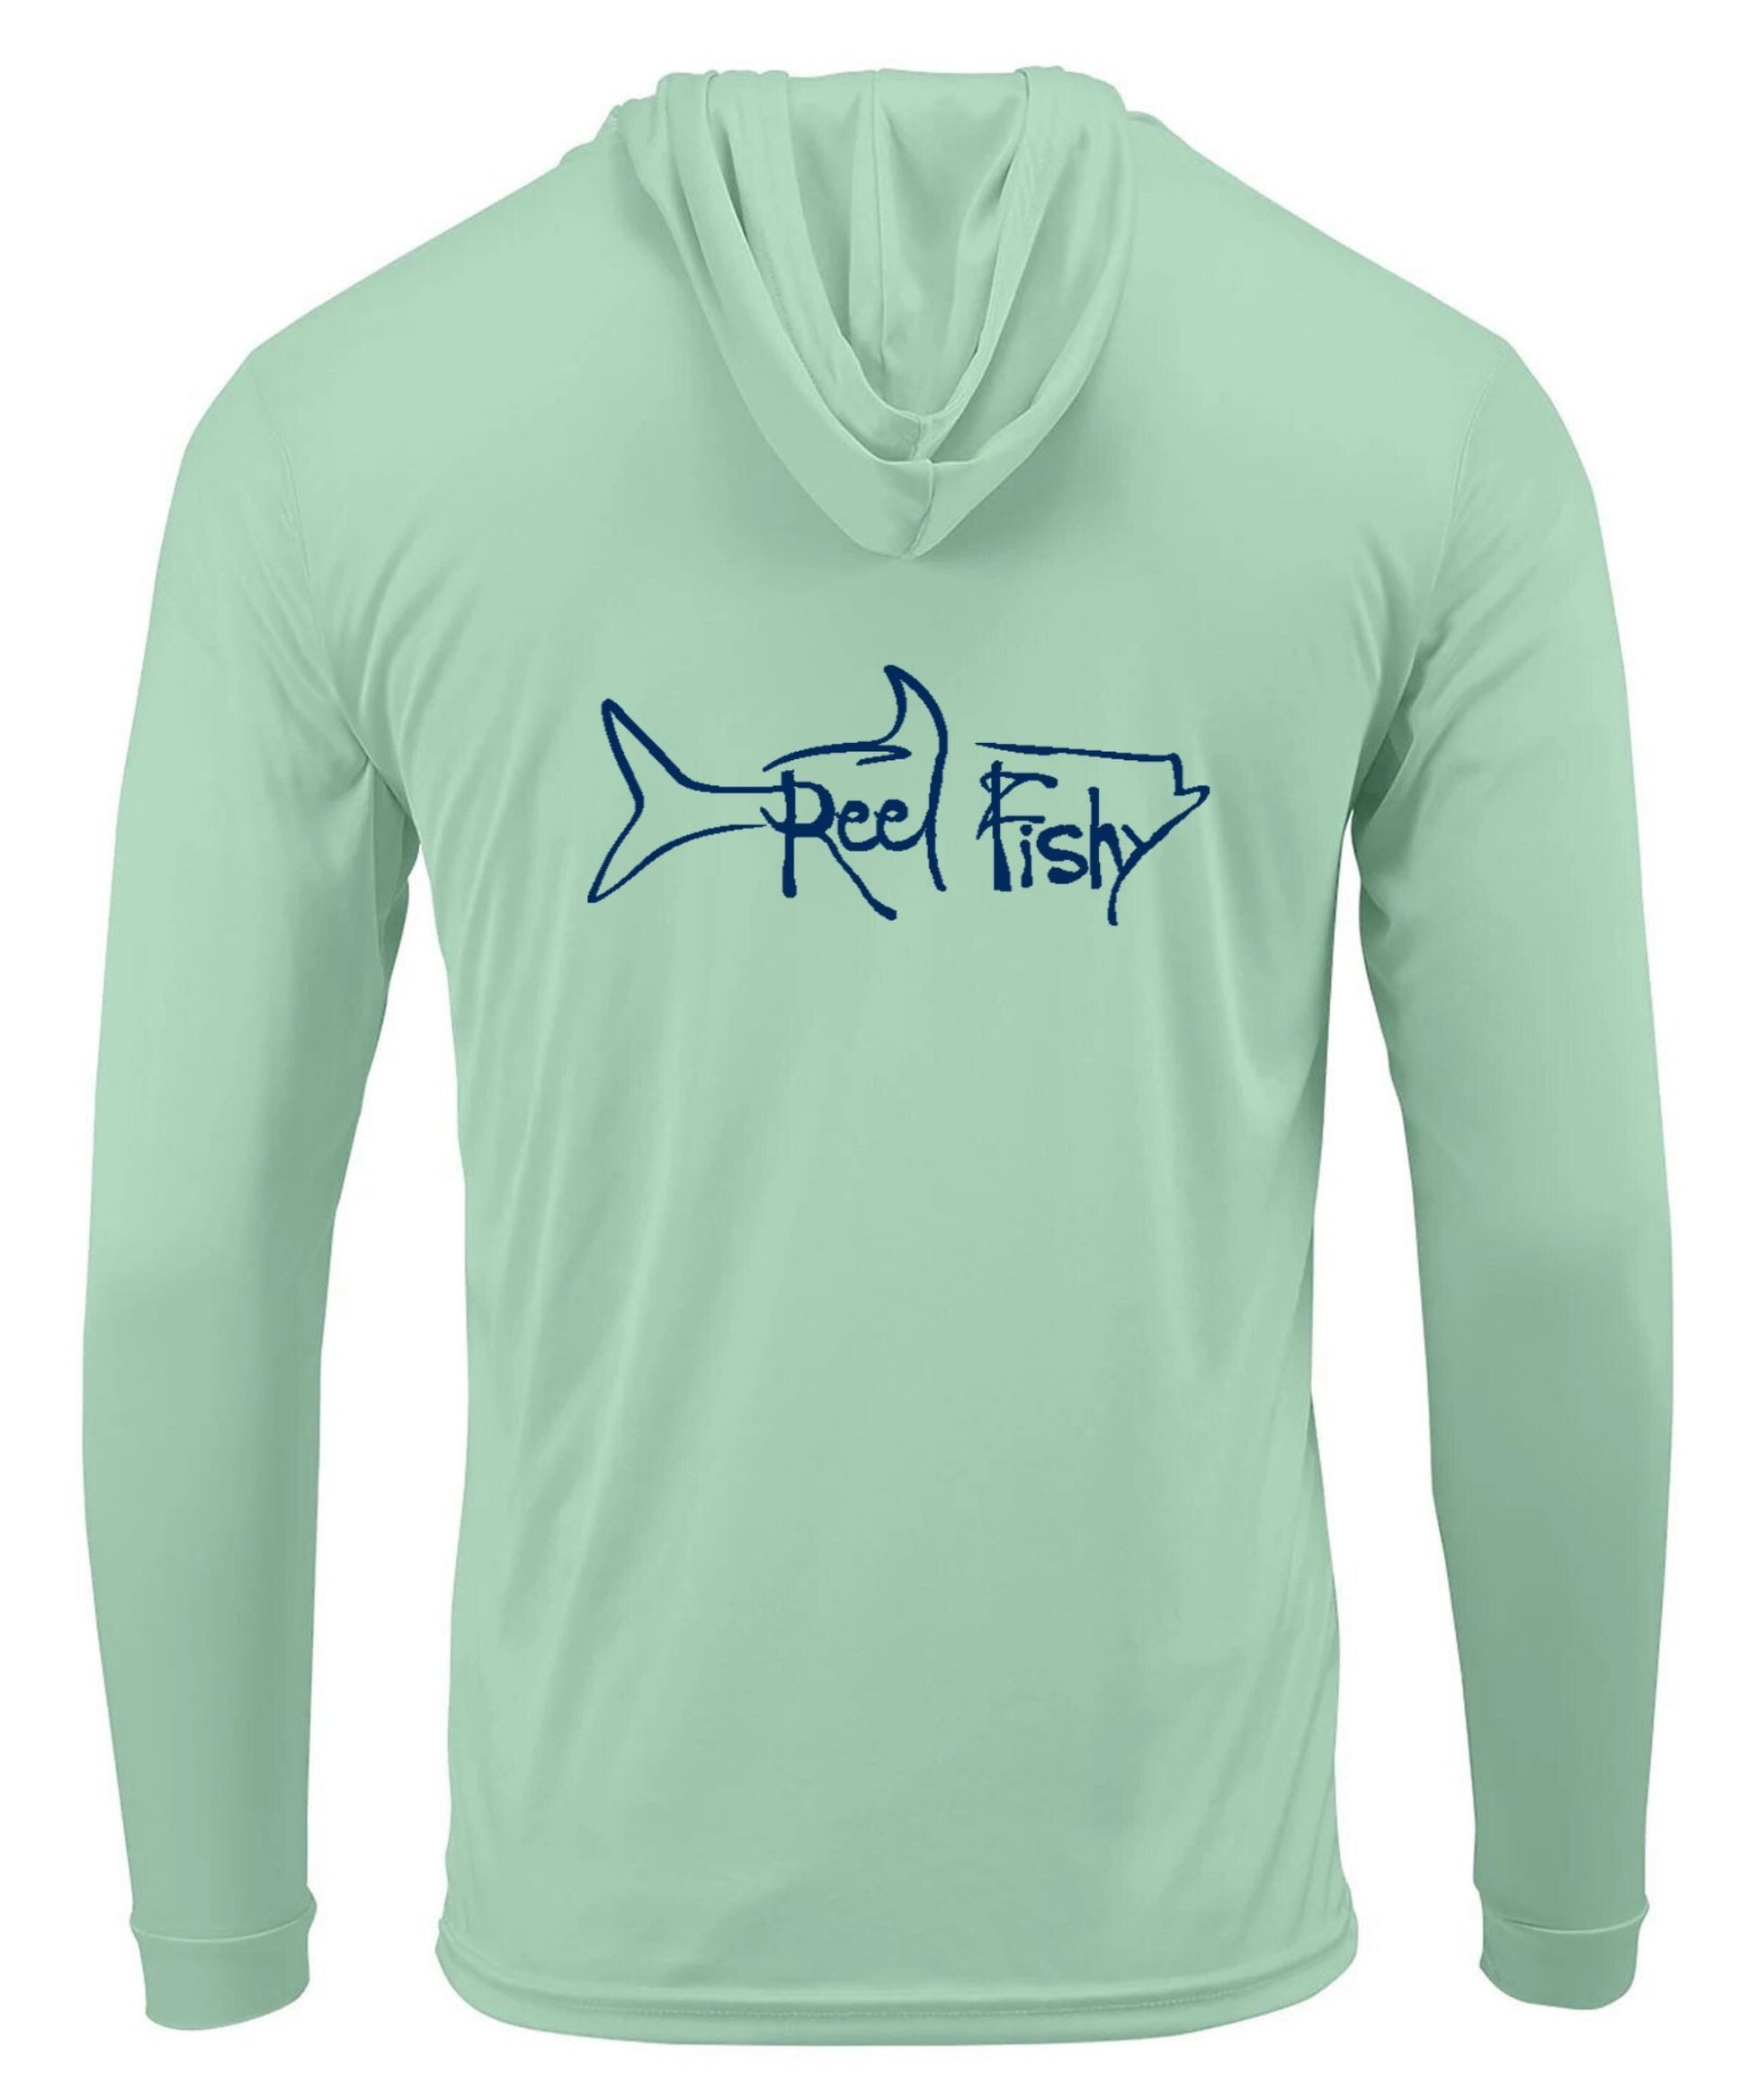 New Redfish Design! Performance Shirts, Hoodies, Digital Camo, 50+Upf 2XL / Blue Mist Camo L/S - unisex